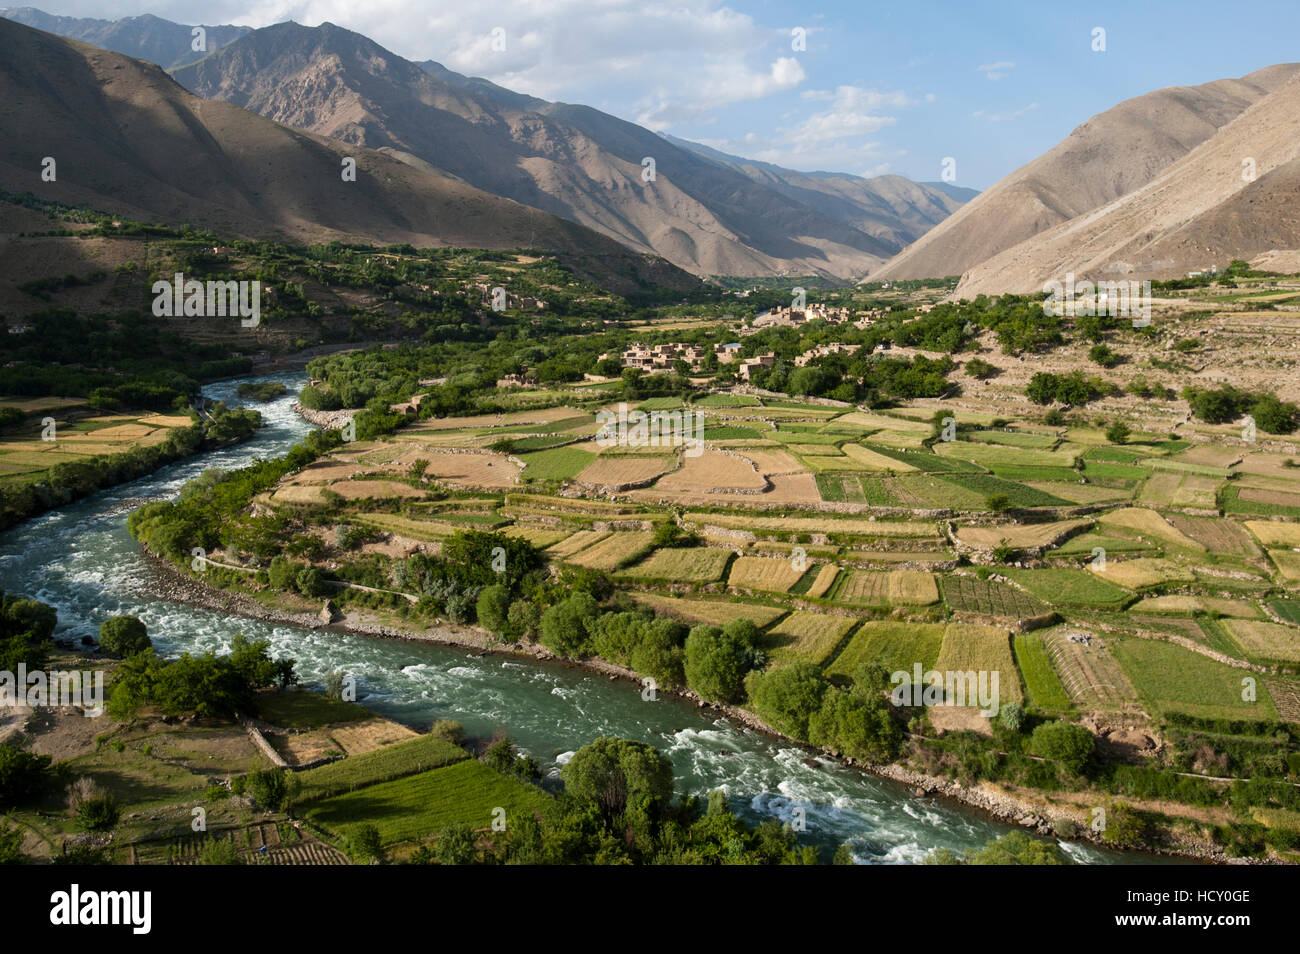 Das Grün der bewässerten Felder kontrastiert mit den trockenen Hügeln oberhalb, Afghanistan Stockfoto